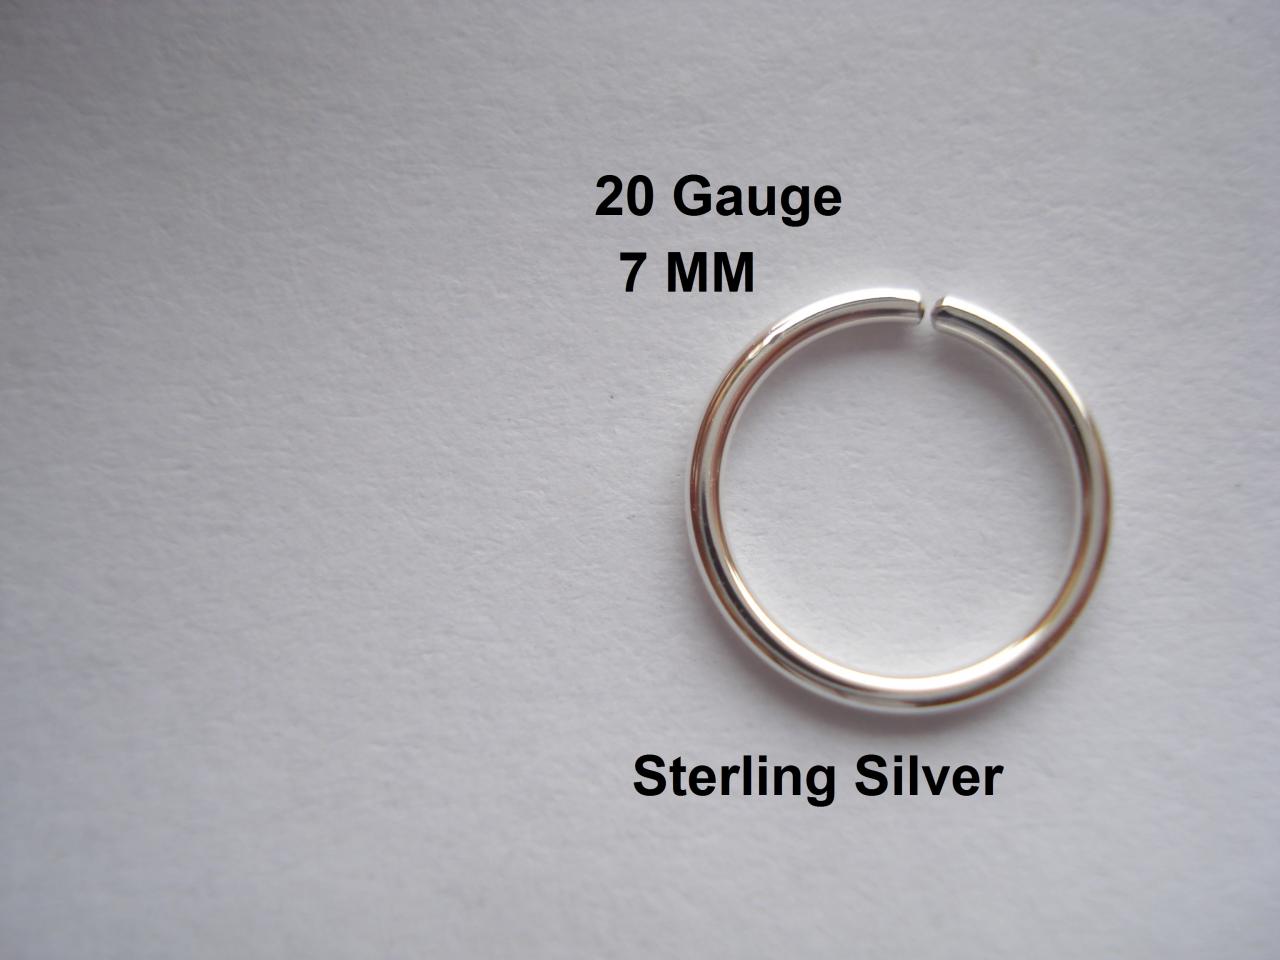 20g Gauge Sterling Silver, Septum/nose Ring/hoop Helix/earring/tragus,7 Mm Inner Diameter